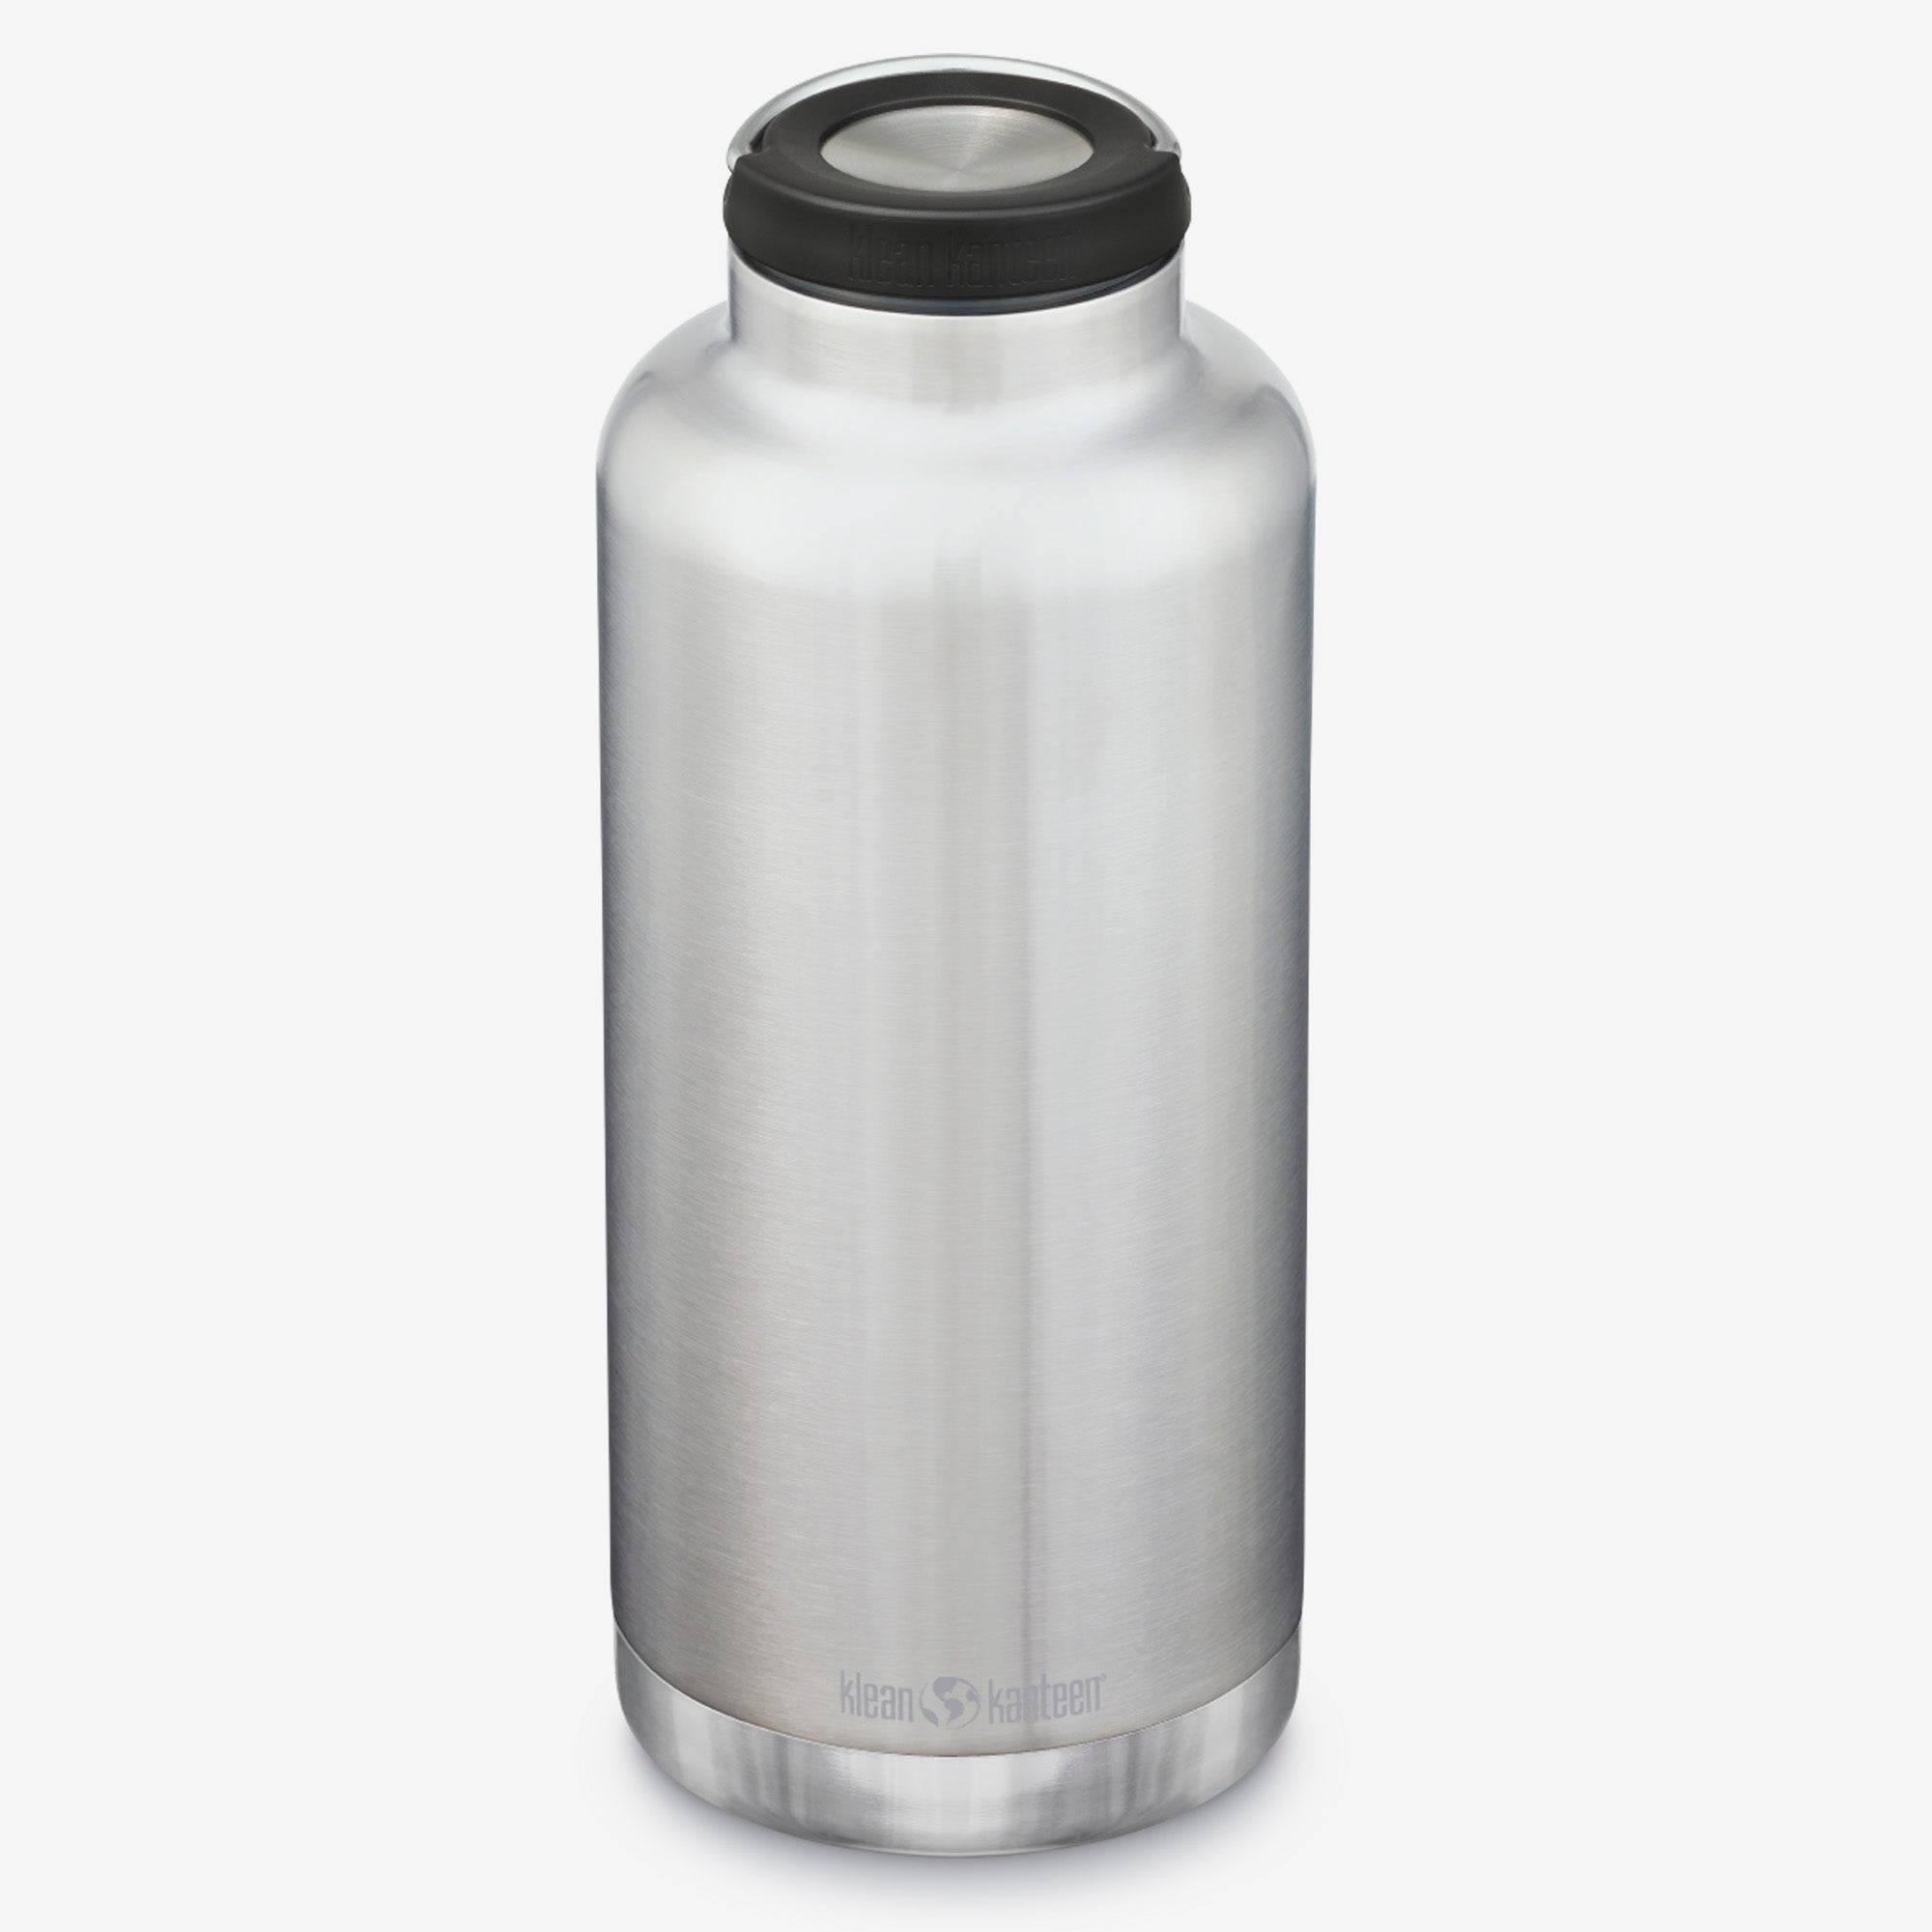 Klean Kanteen 12 fl oz Stainless Steel Insulated Water Bottle